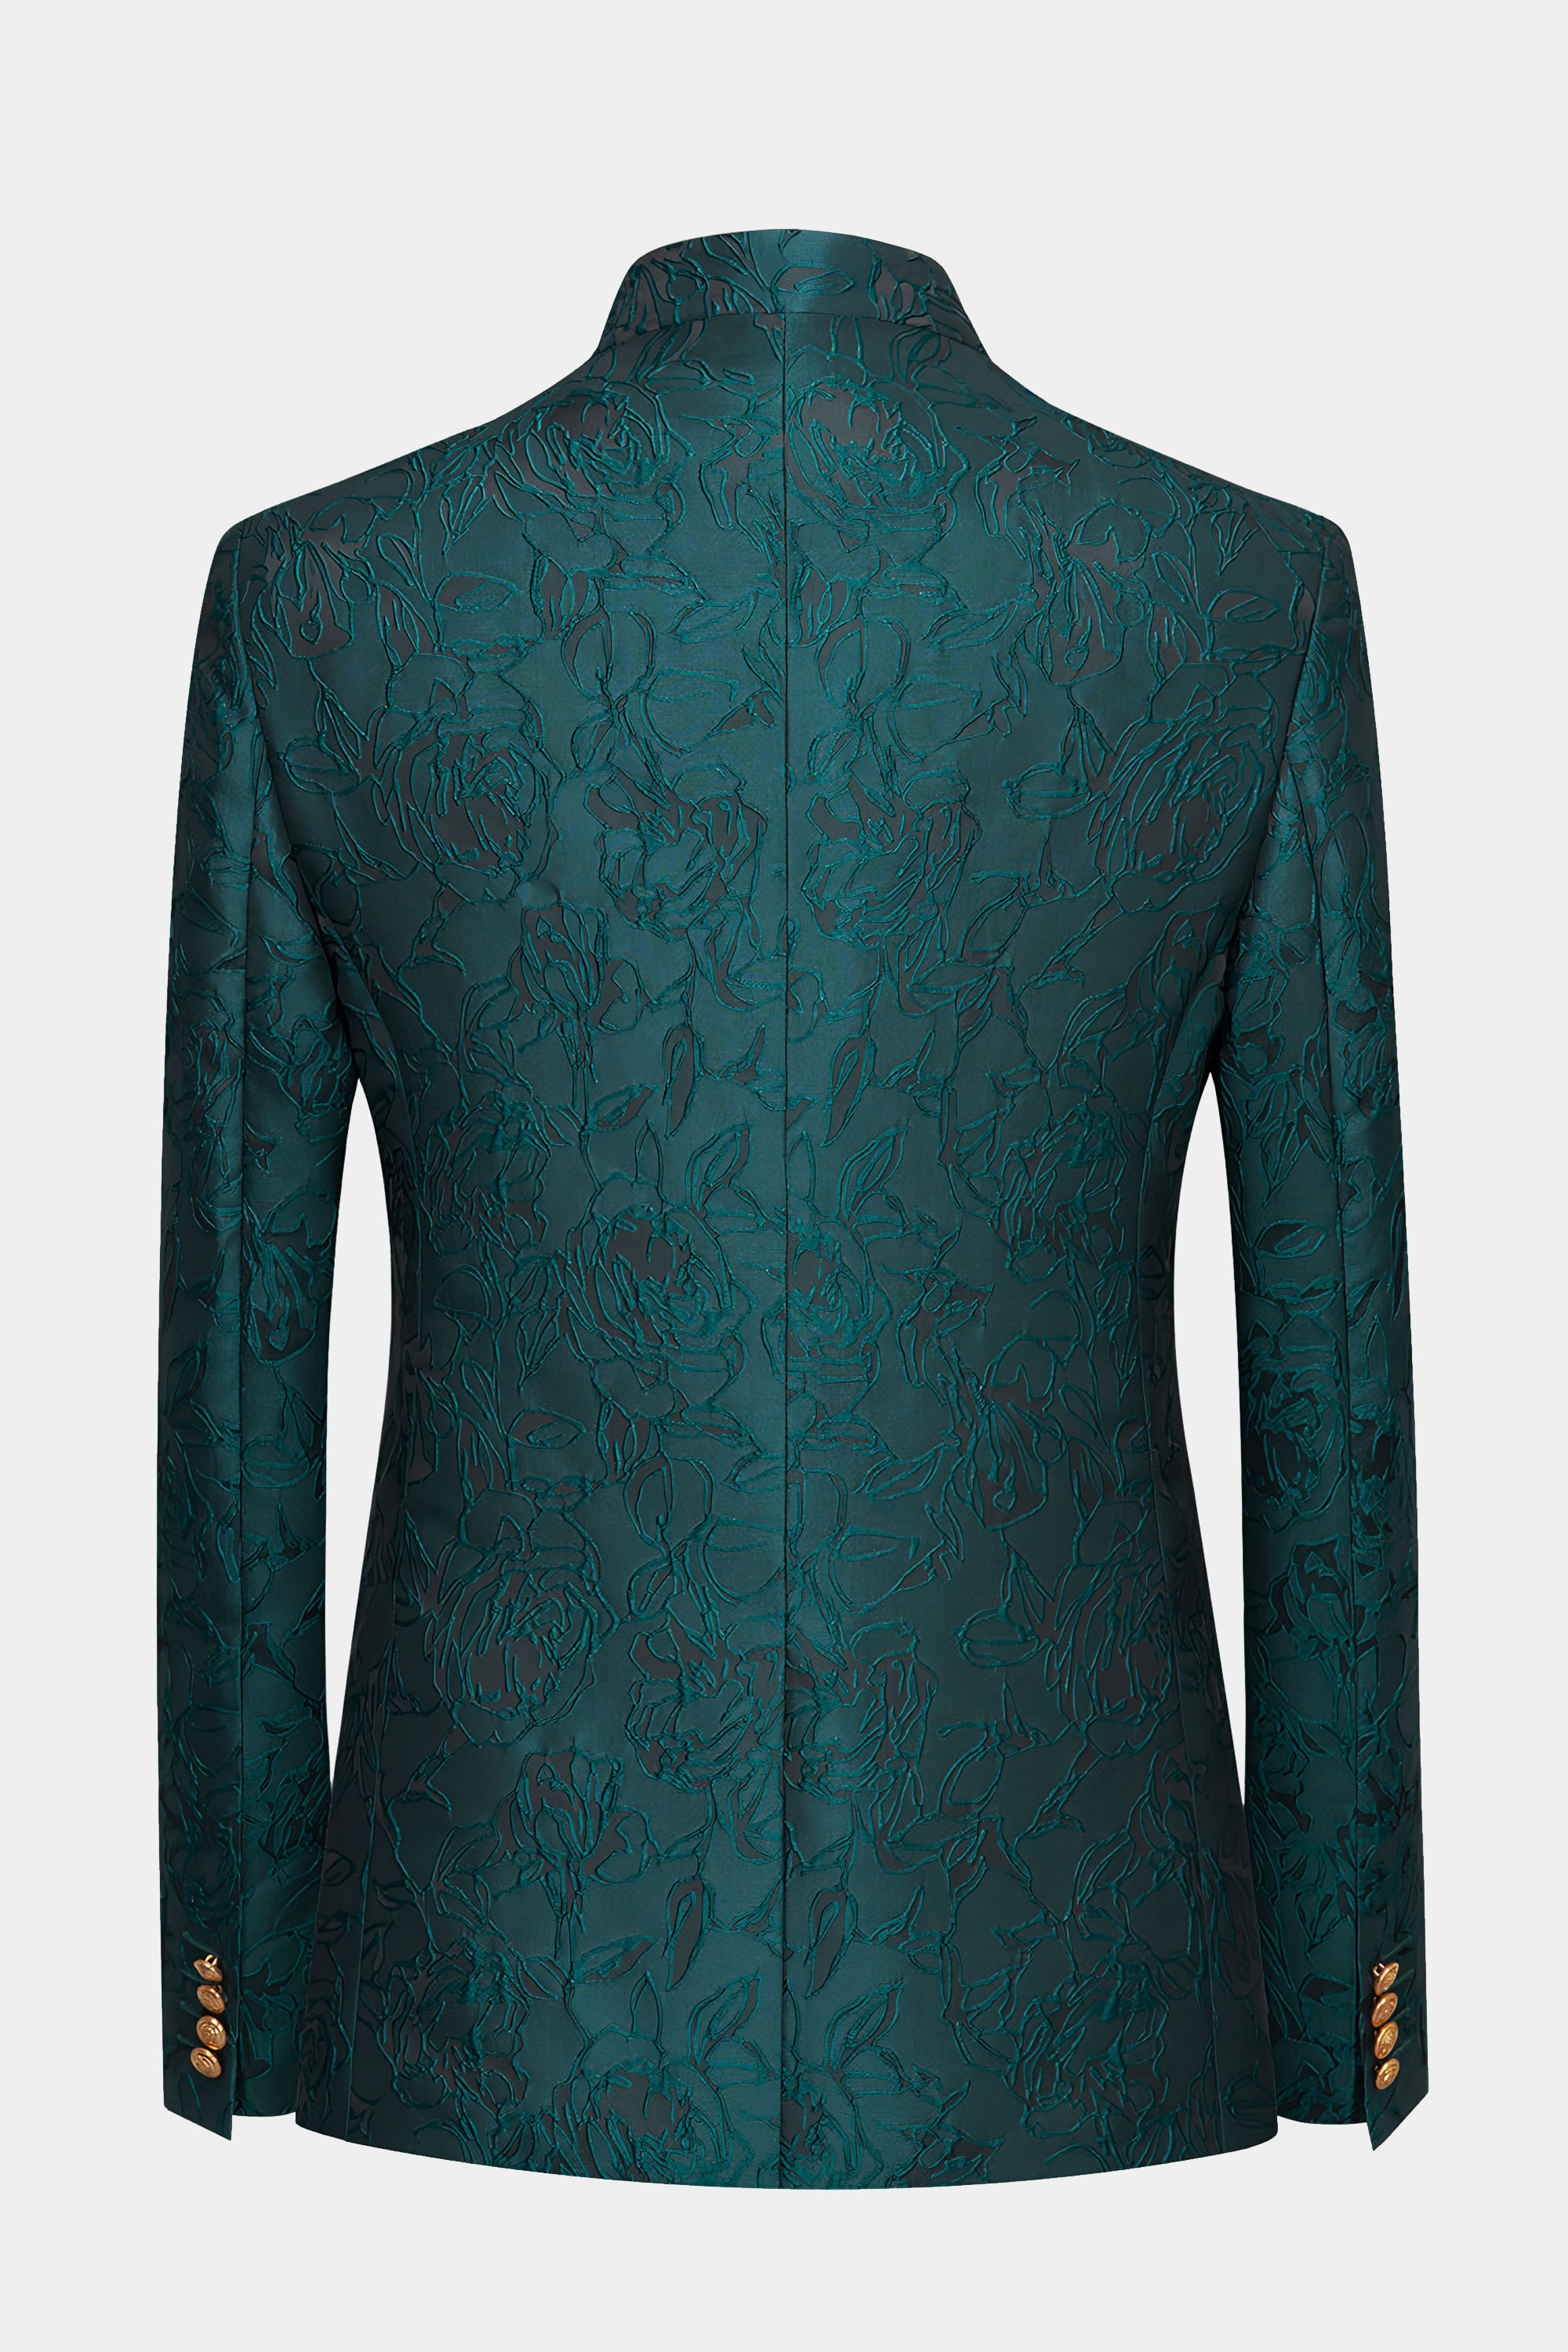 Dark Teal Mandarin Collar Suit | Gentleman's Guru